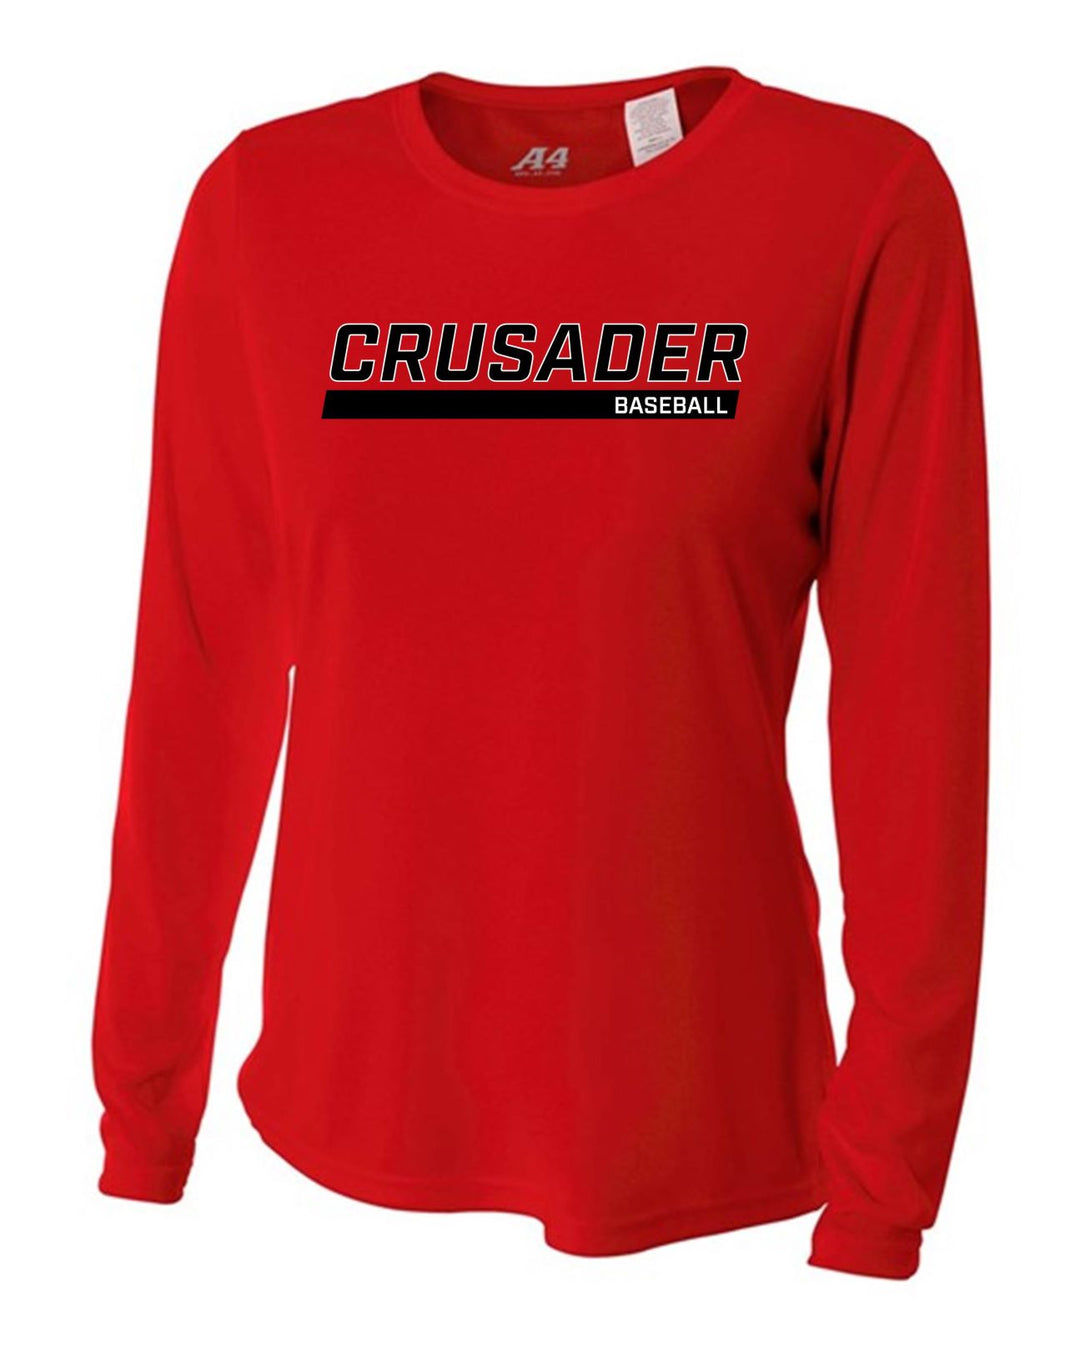 WCU Baseball Women's Long-Sleeve Performance Shirt WCU Baseball Red CRUSADER - Third Coast Soccer